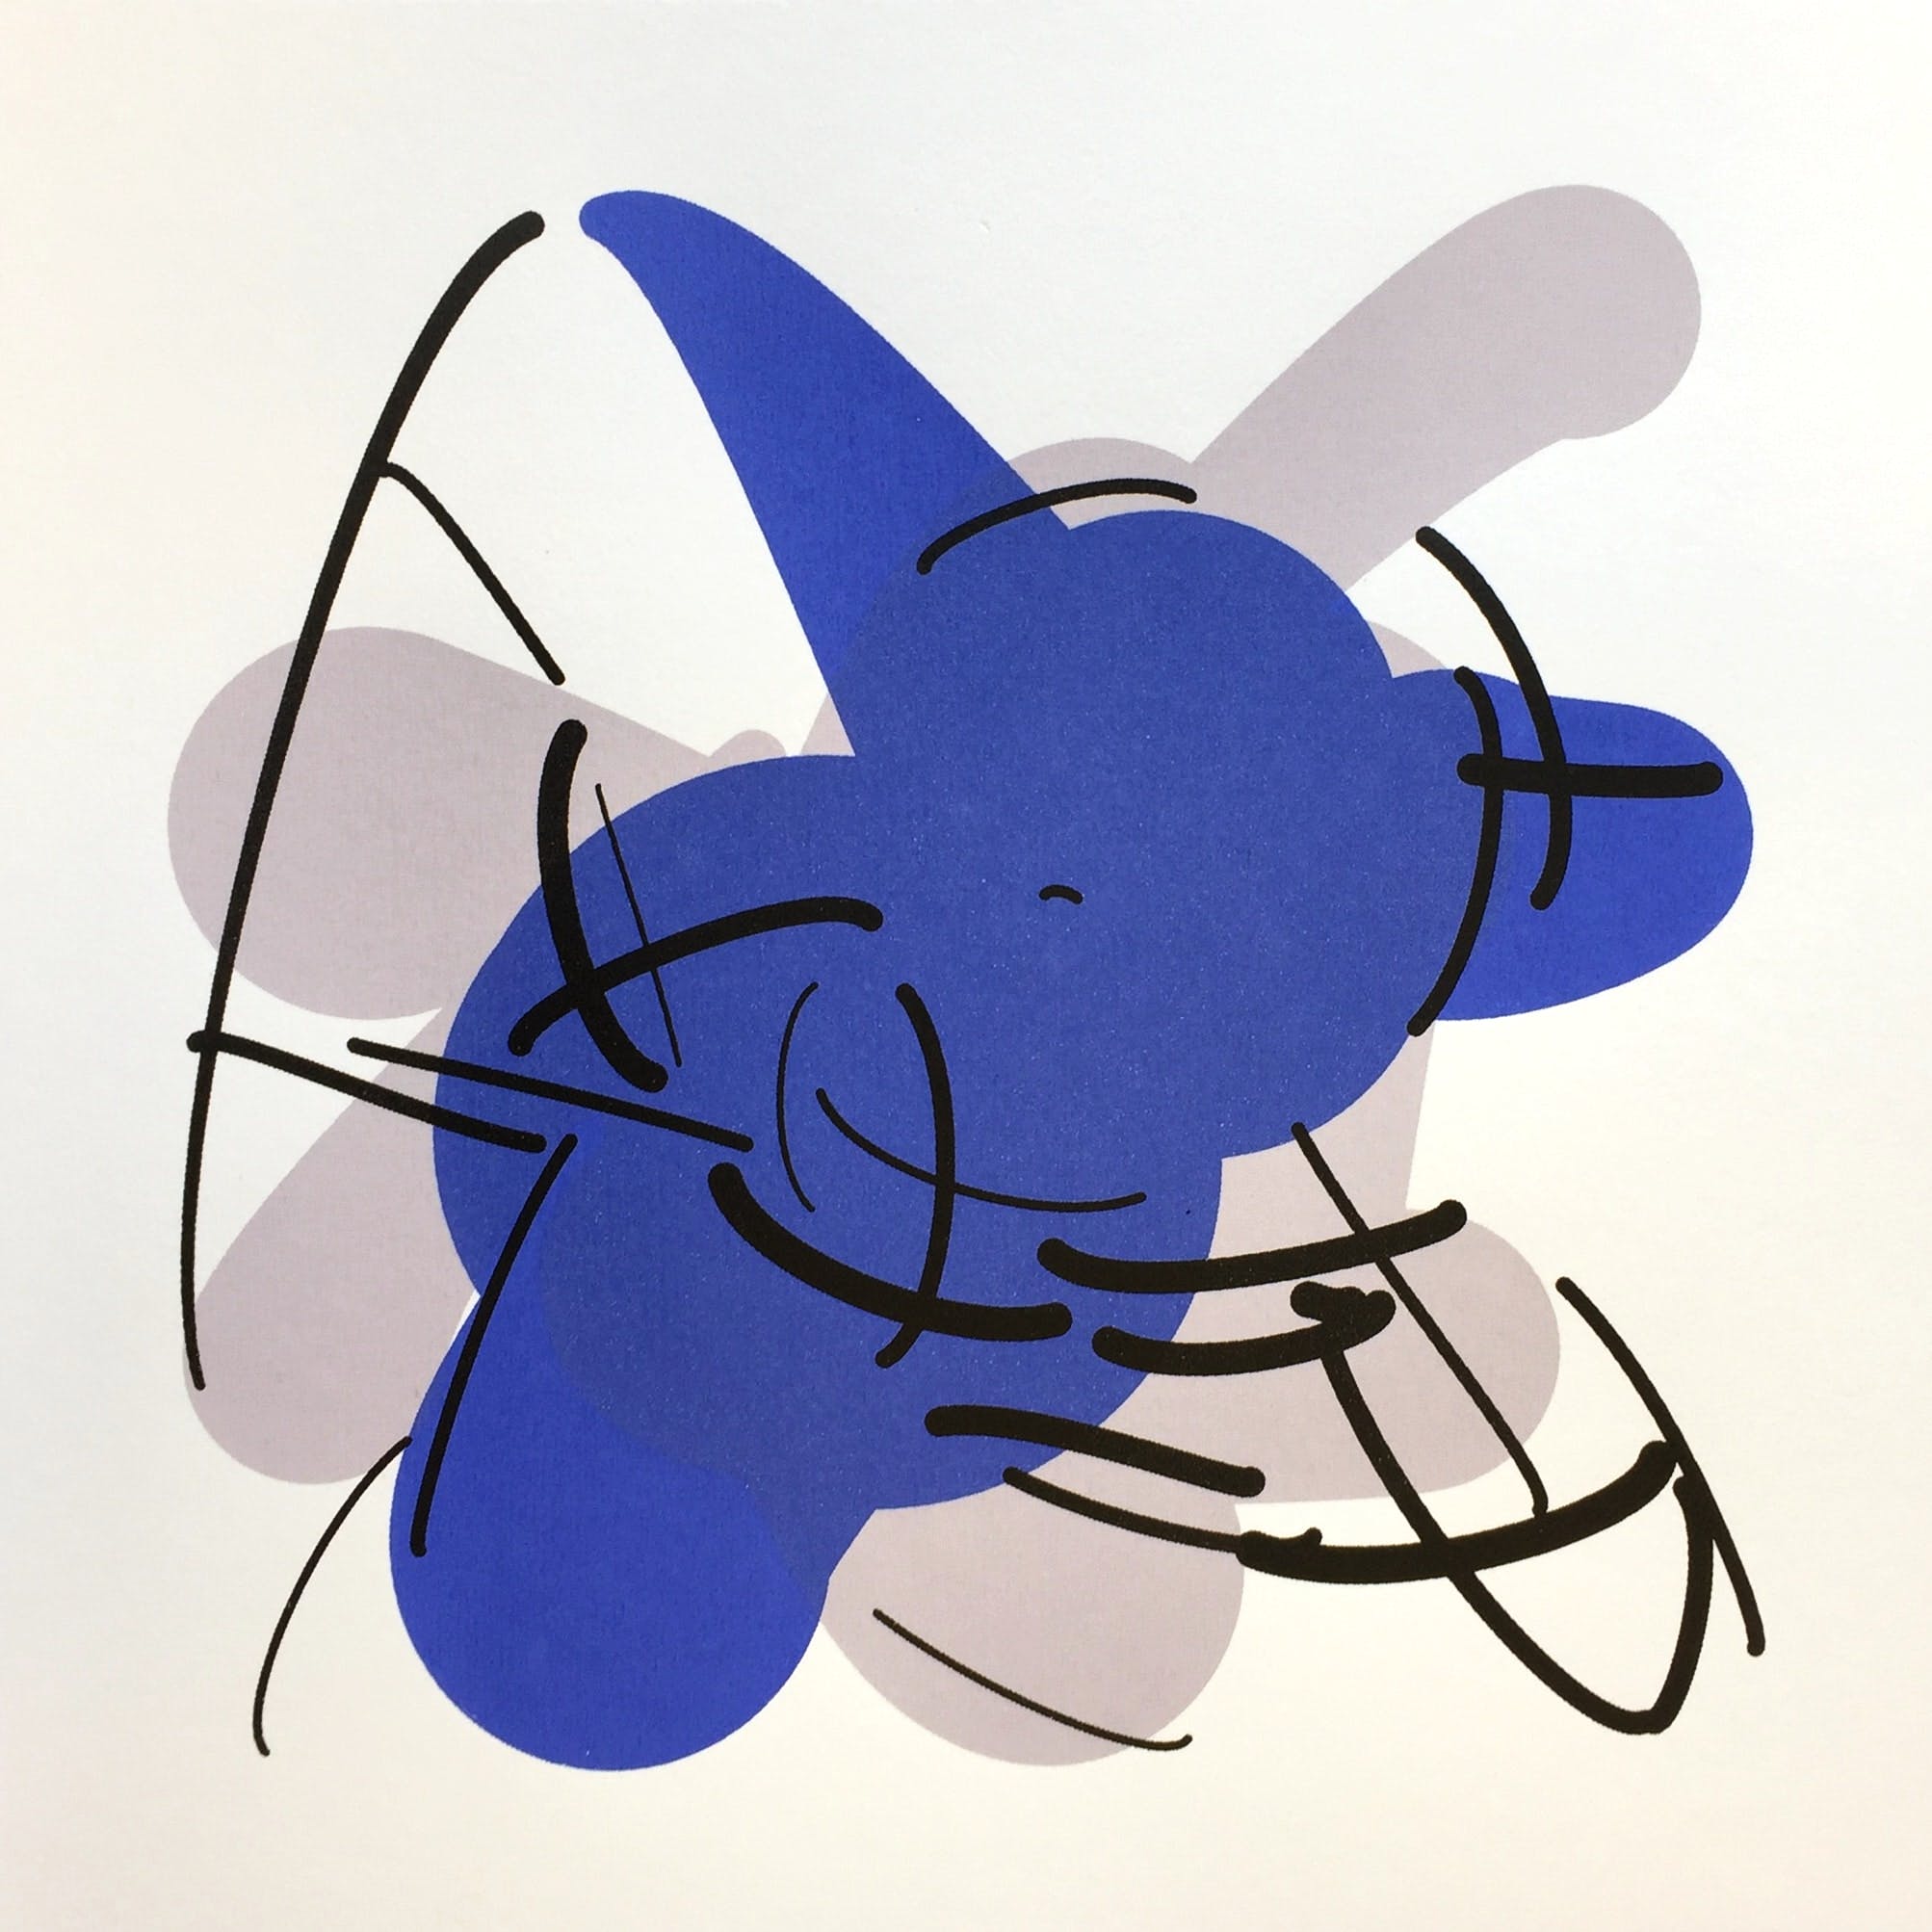 Blue,Mechanical fan,Cartoon,Illustration,Propeller,Art